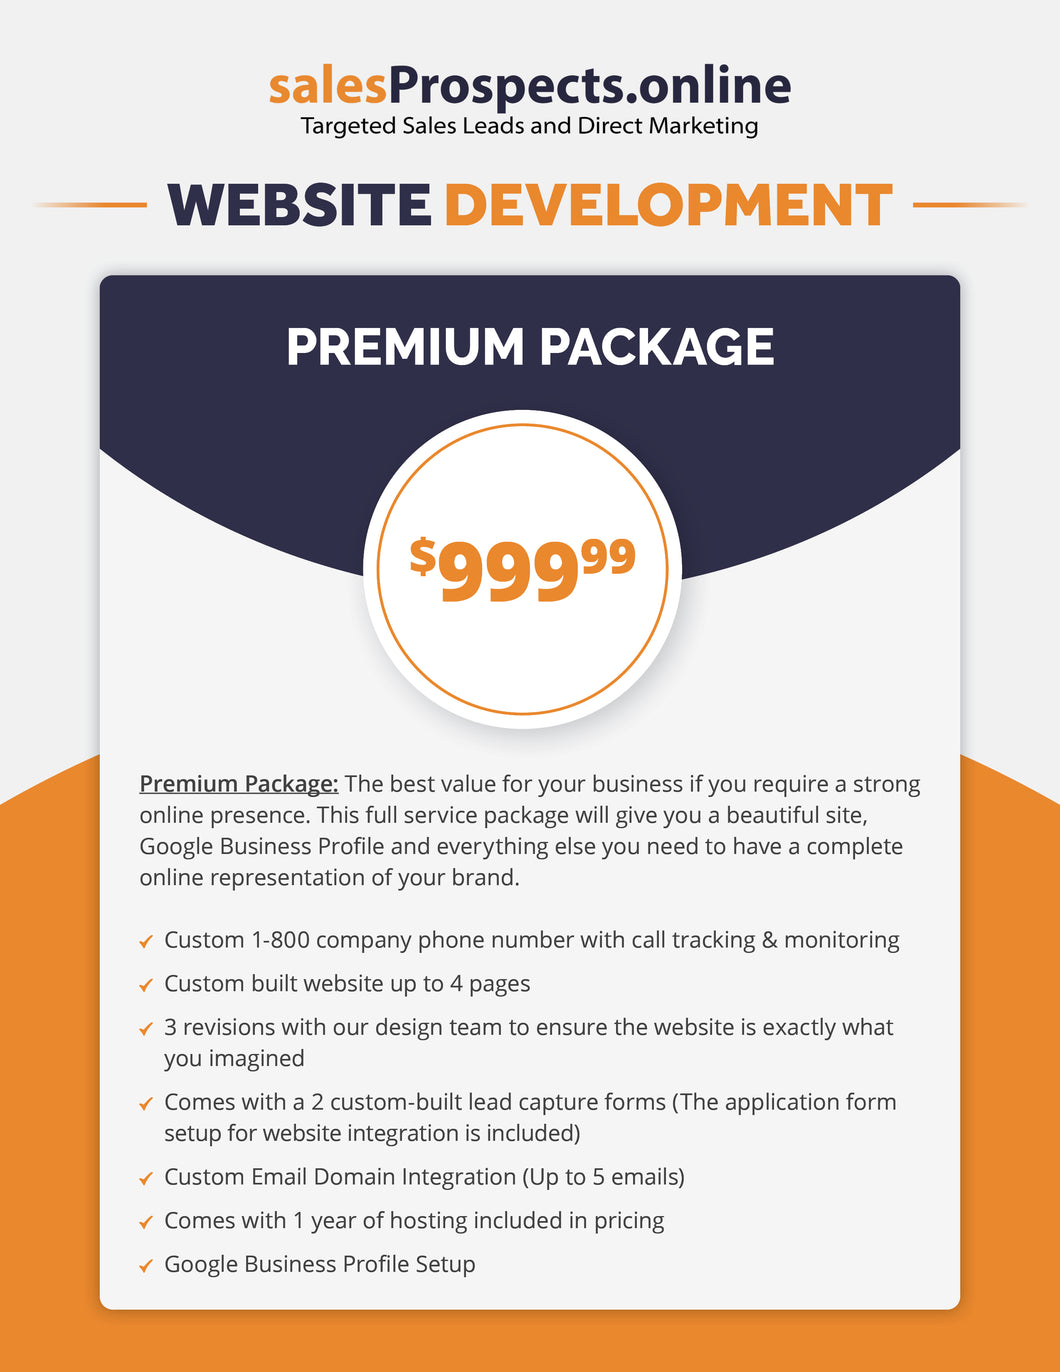 Website Development: Premium Package